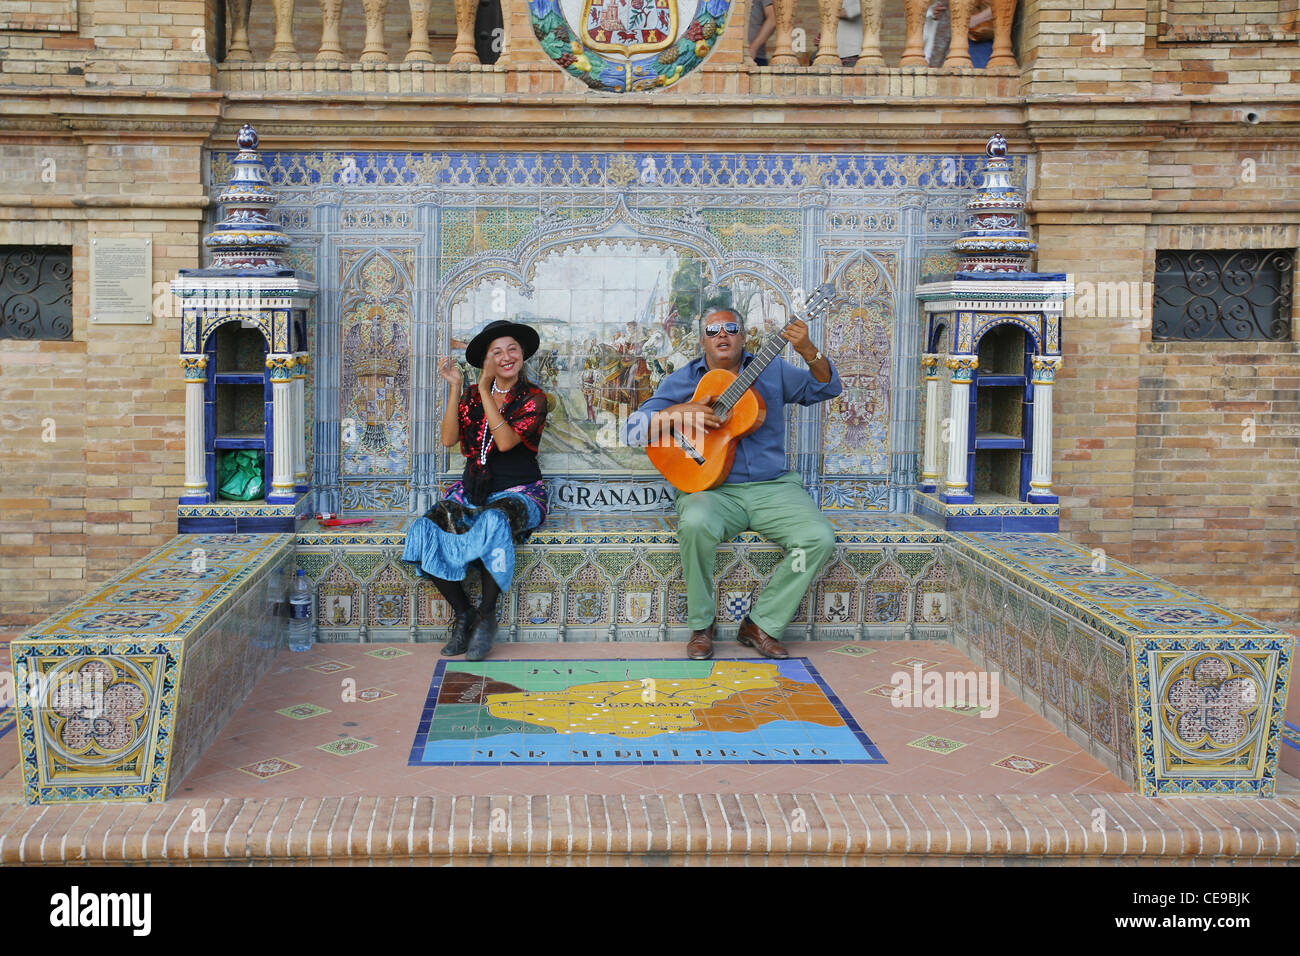 Flamenco-Musikern im Granada Alkoven von der Plaza de España in Sevilla, Spanien Stockfoto